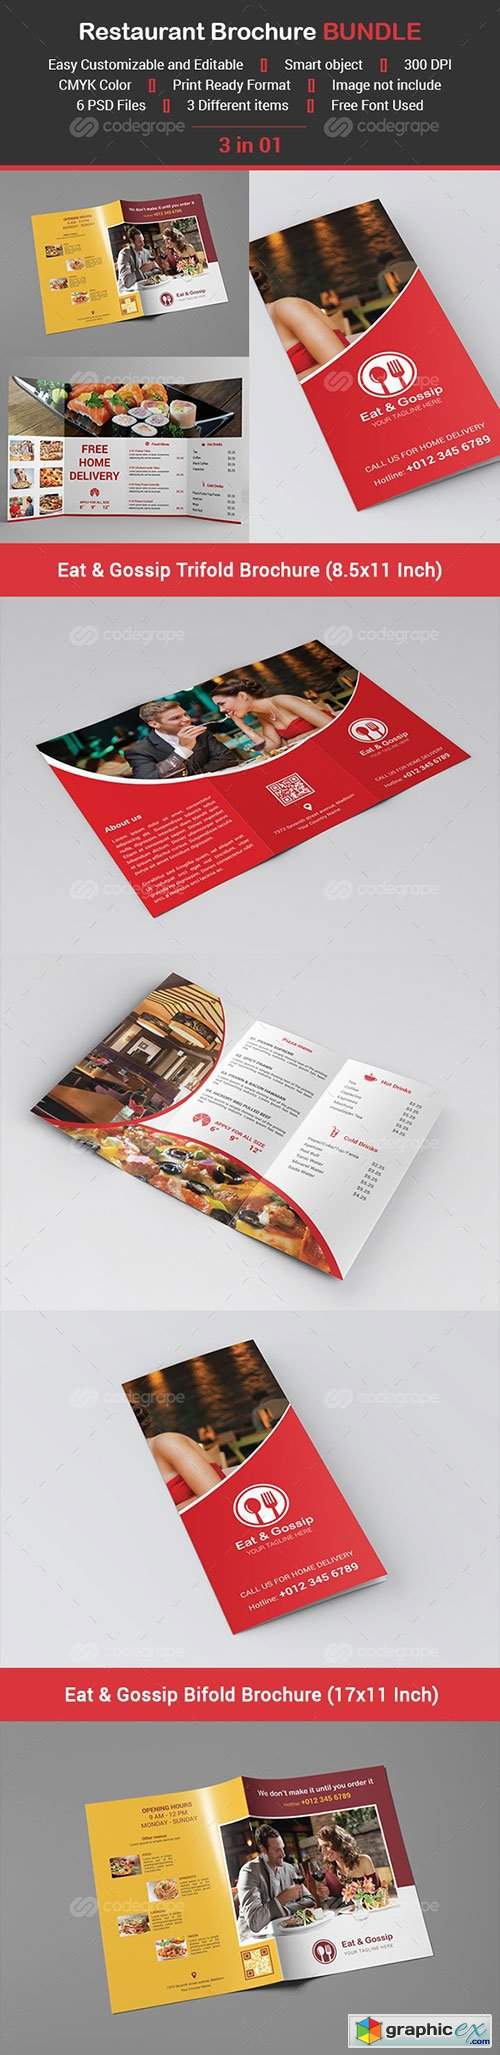 Restaurant Brochure BUNDLE